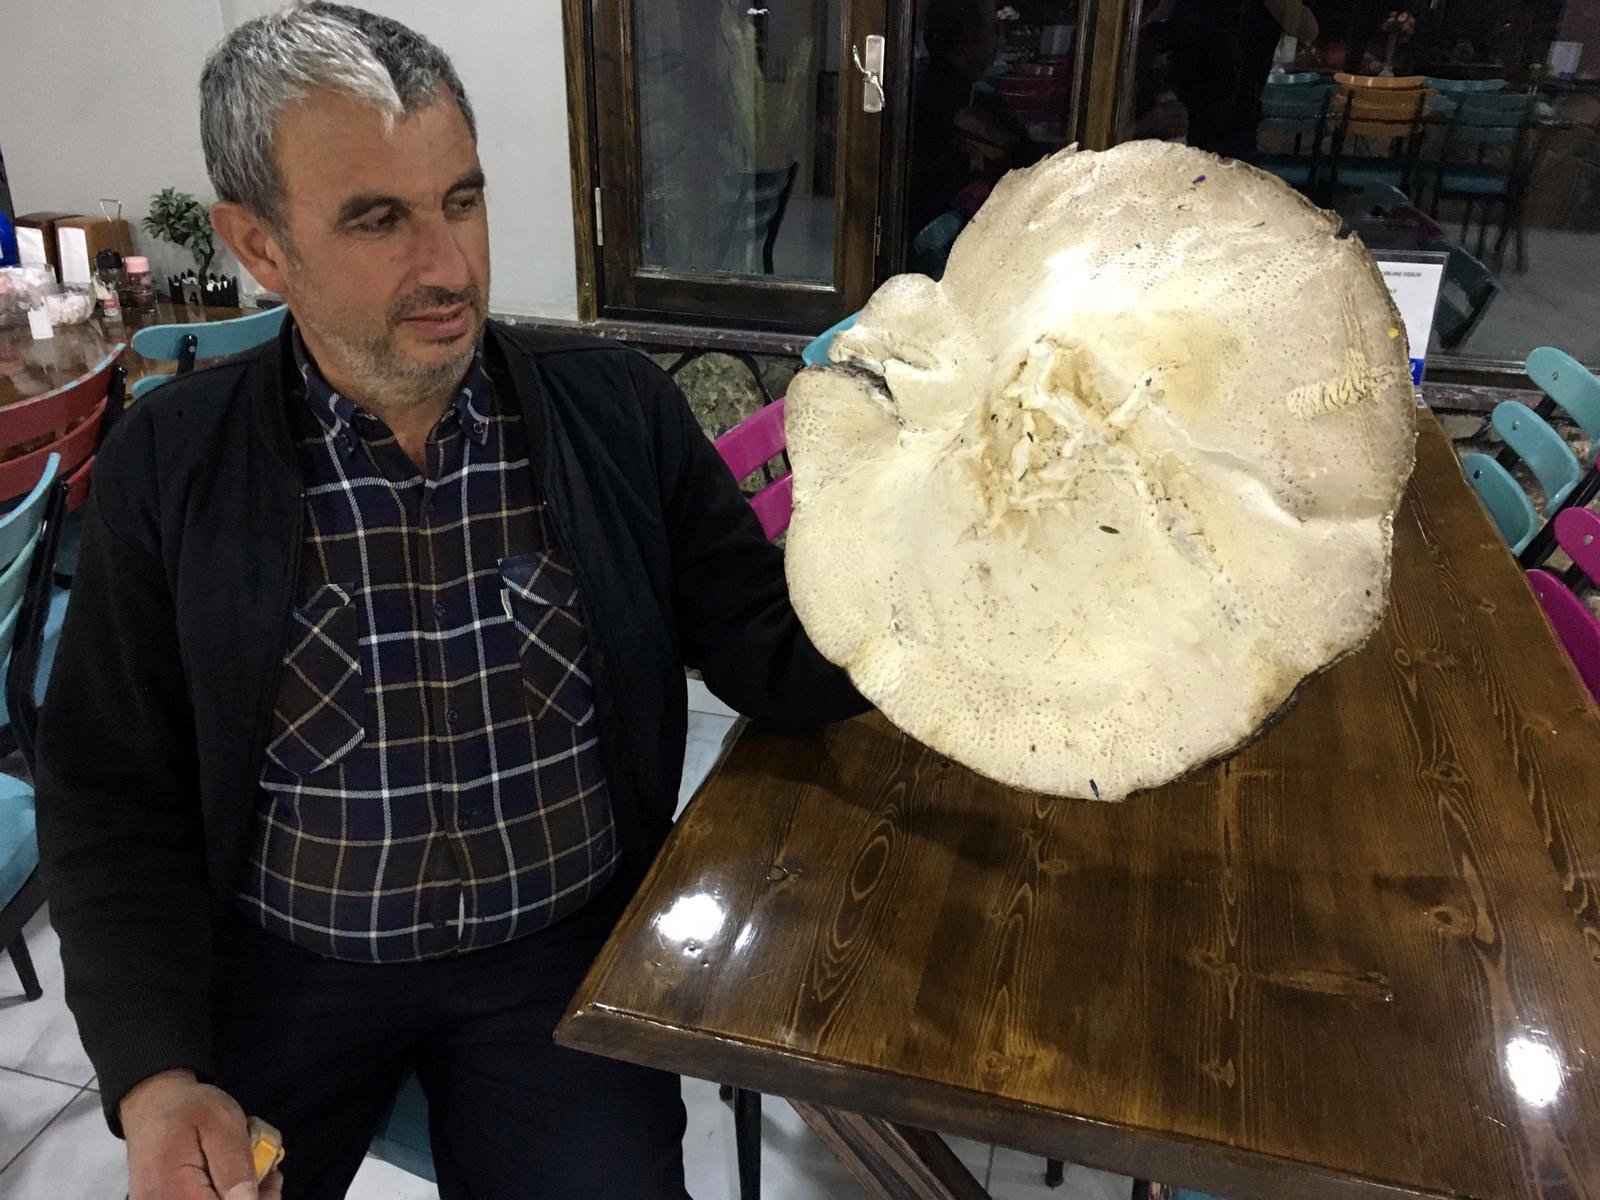 Ernail Çiçek poses with the large mushroom he found in Gümüşhane, Turkey, June 28, 2022. (IHA Photo)